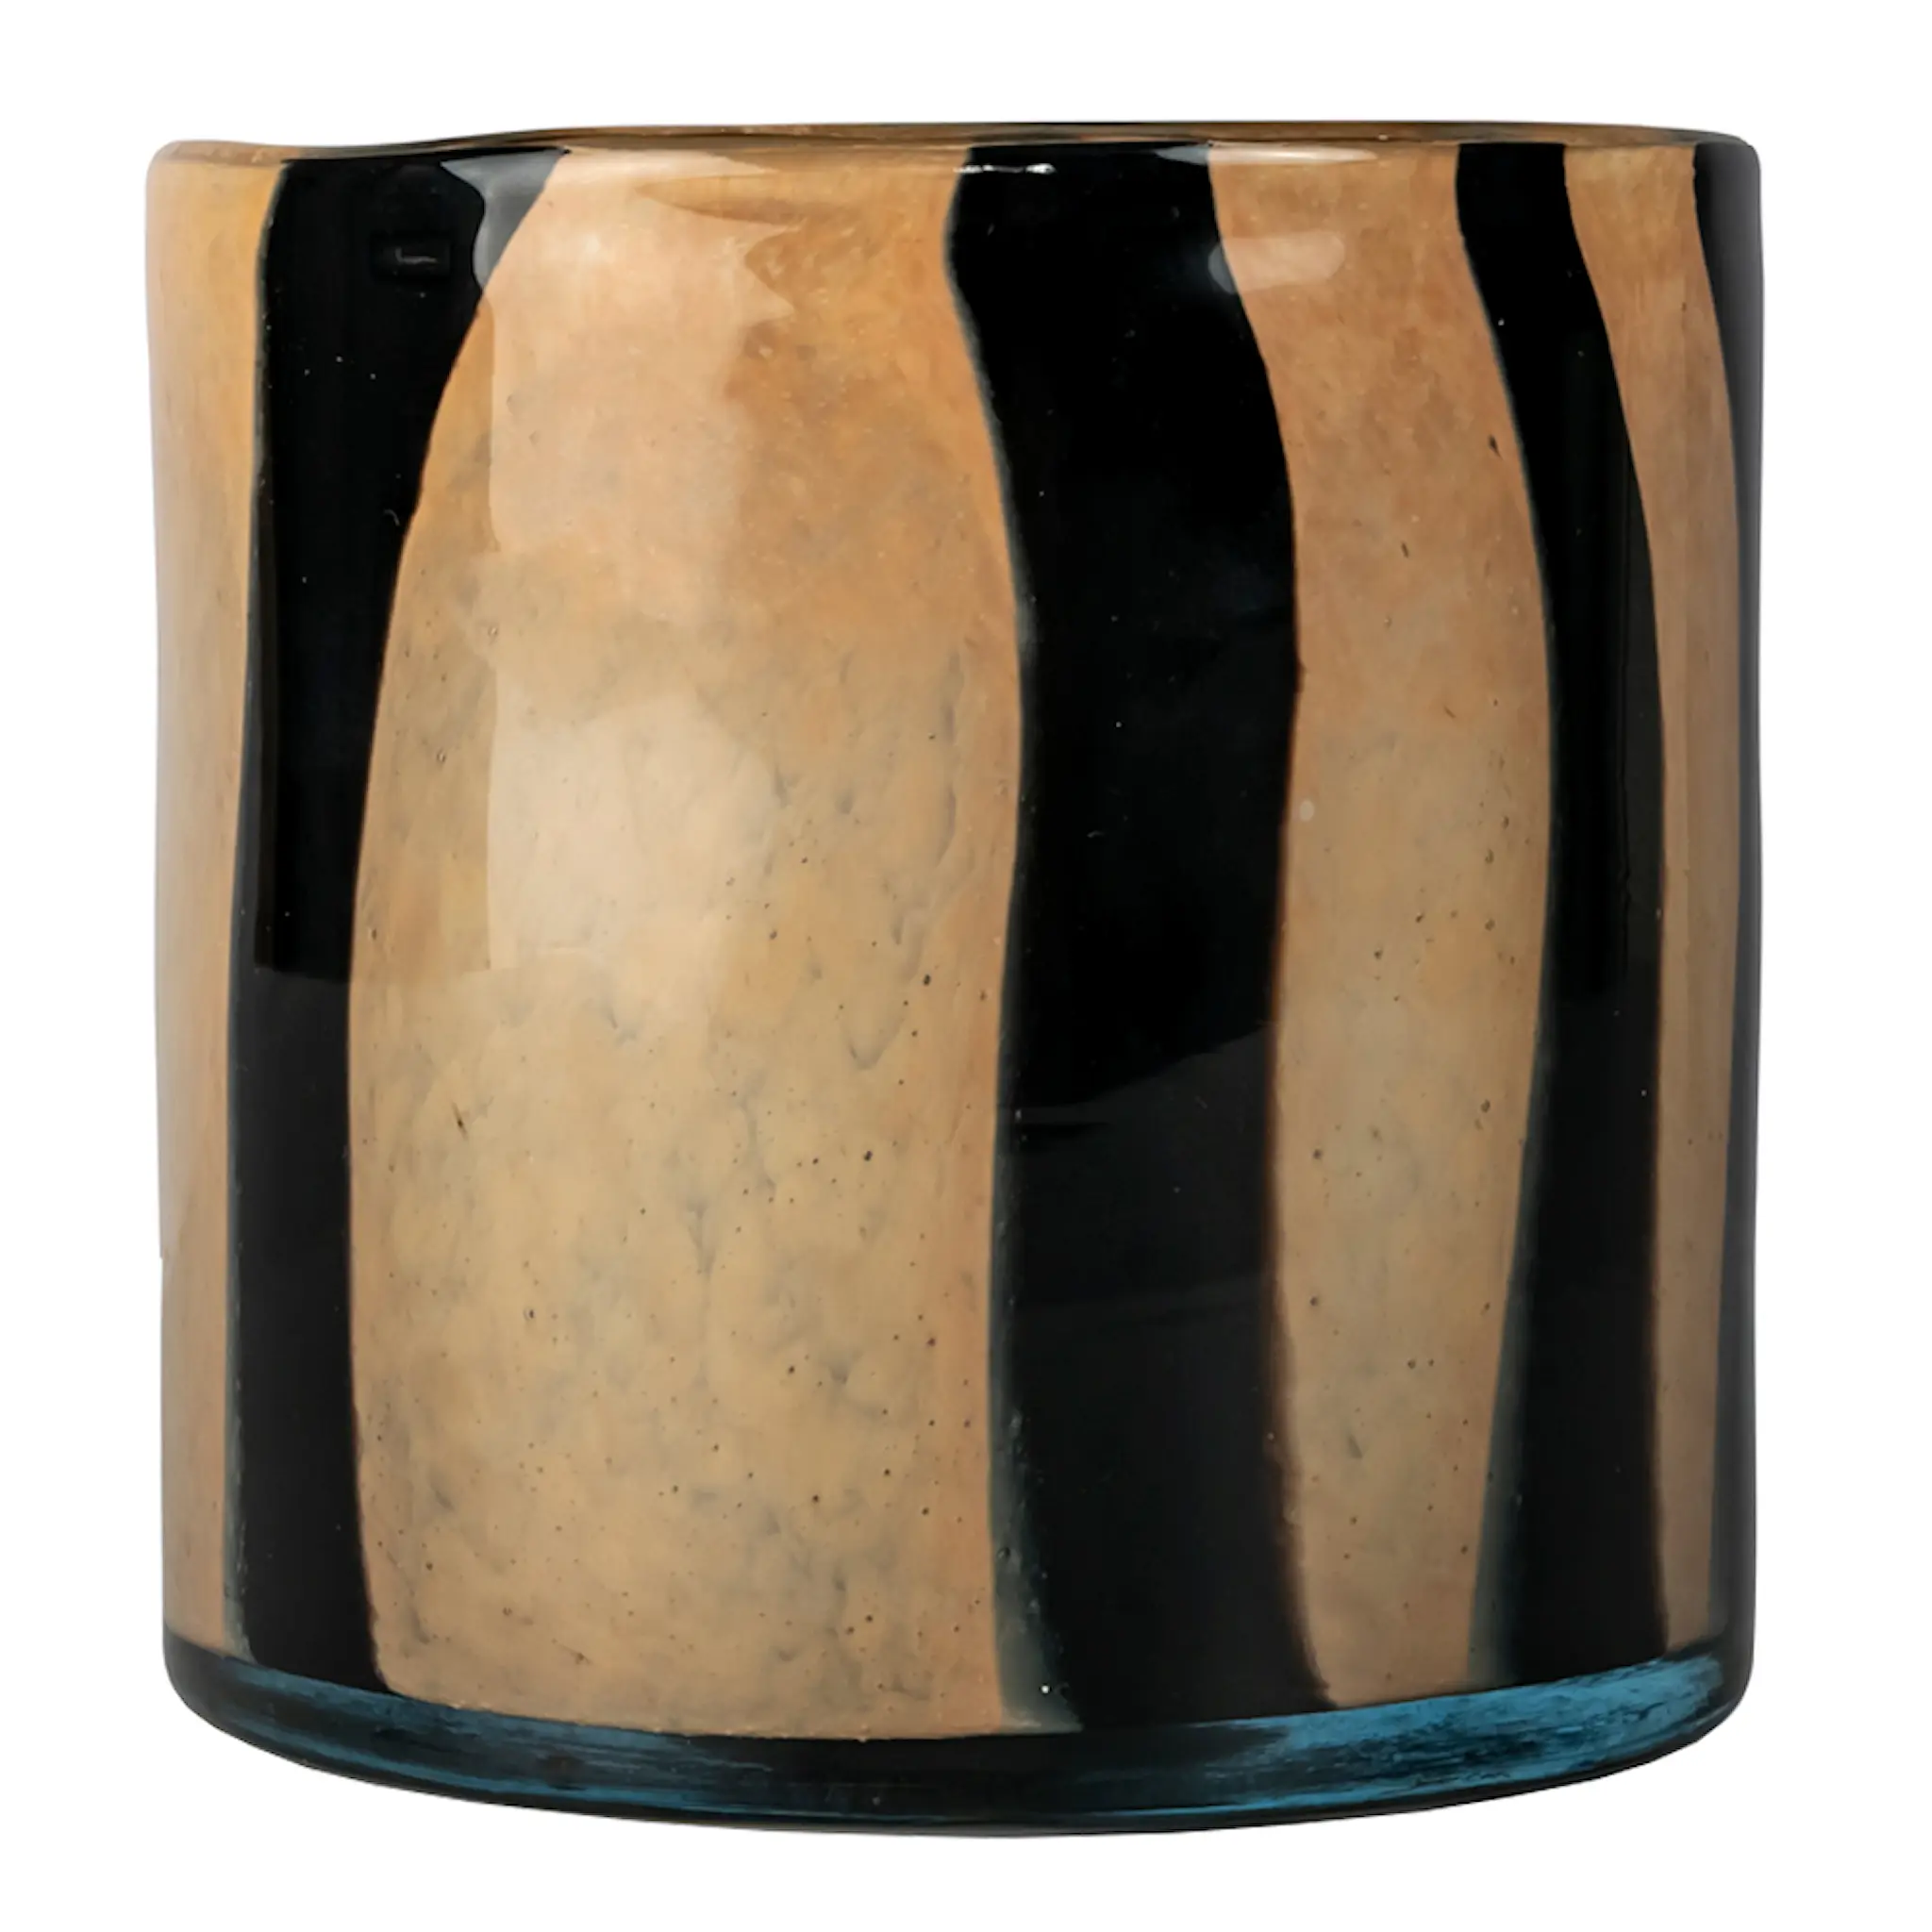 ByOn Calore vase/lyslykt 15x15 cm beige/svart striper